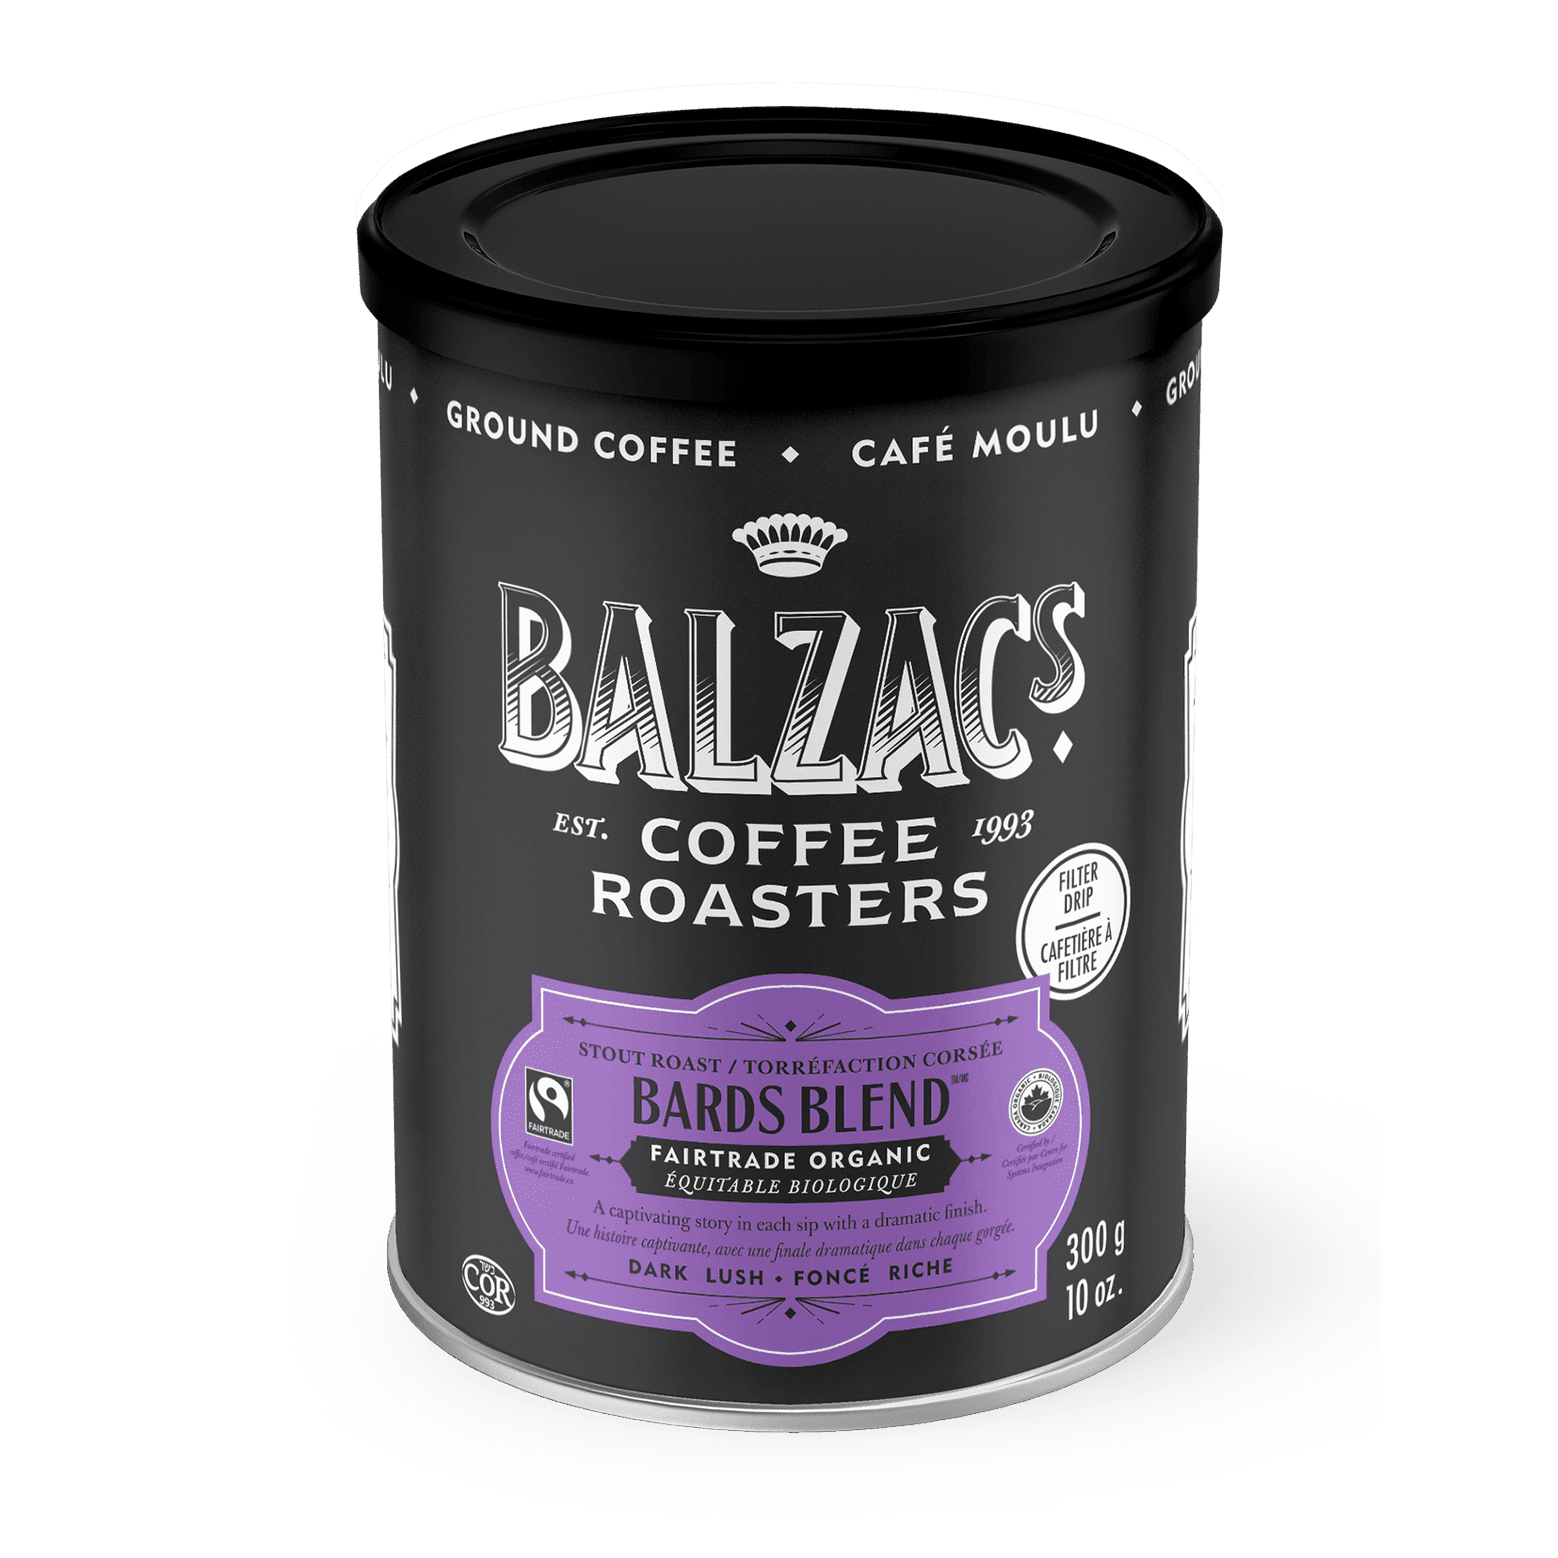 Balzac's - ground coffee - bards blend - 300 g